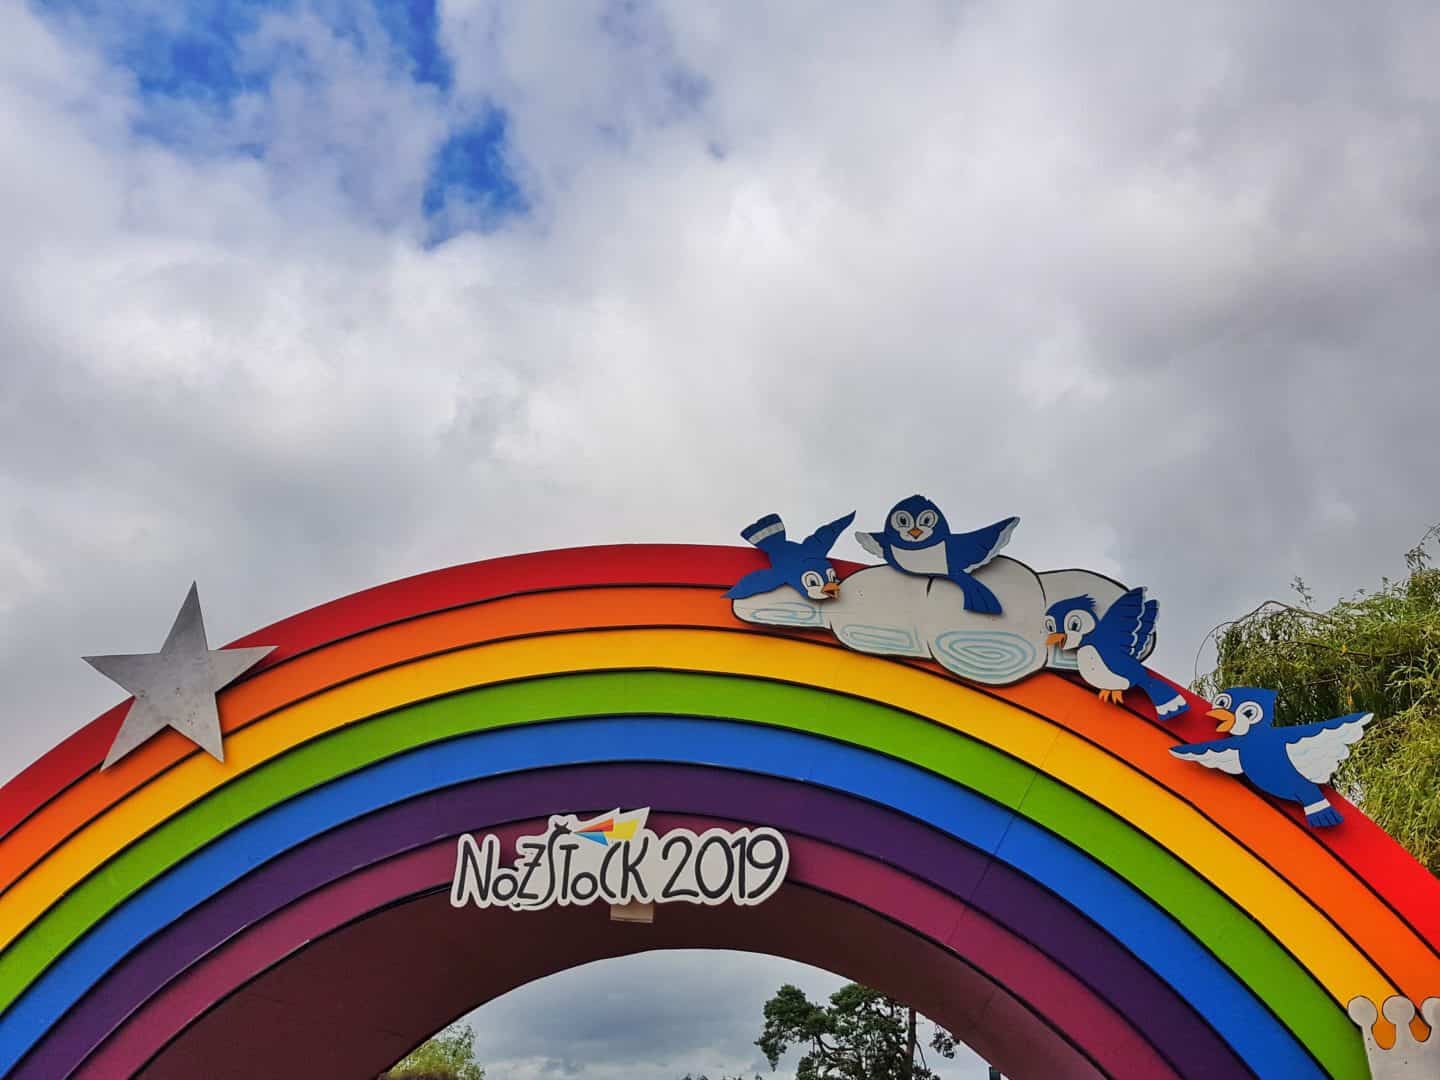 rainbow entrance sign at Nozstock